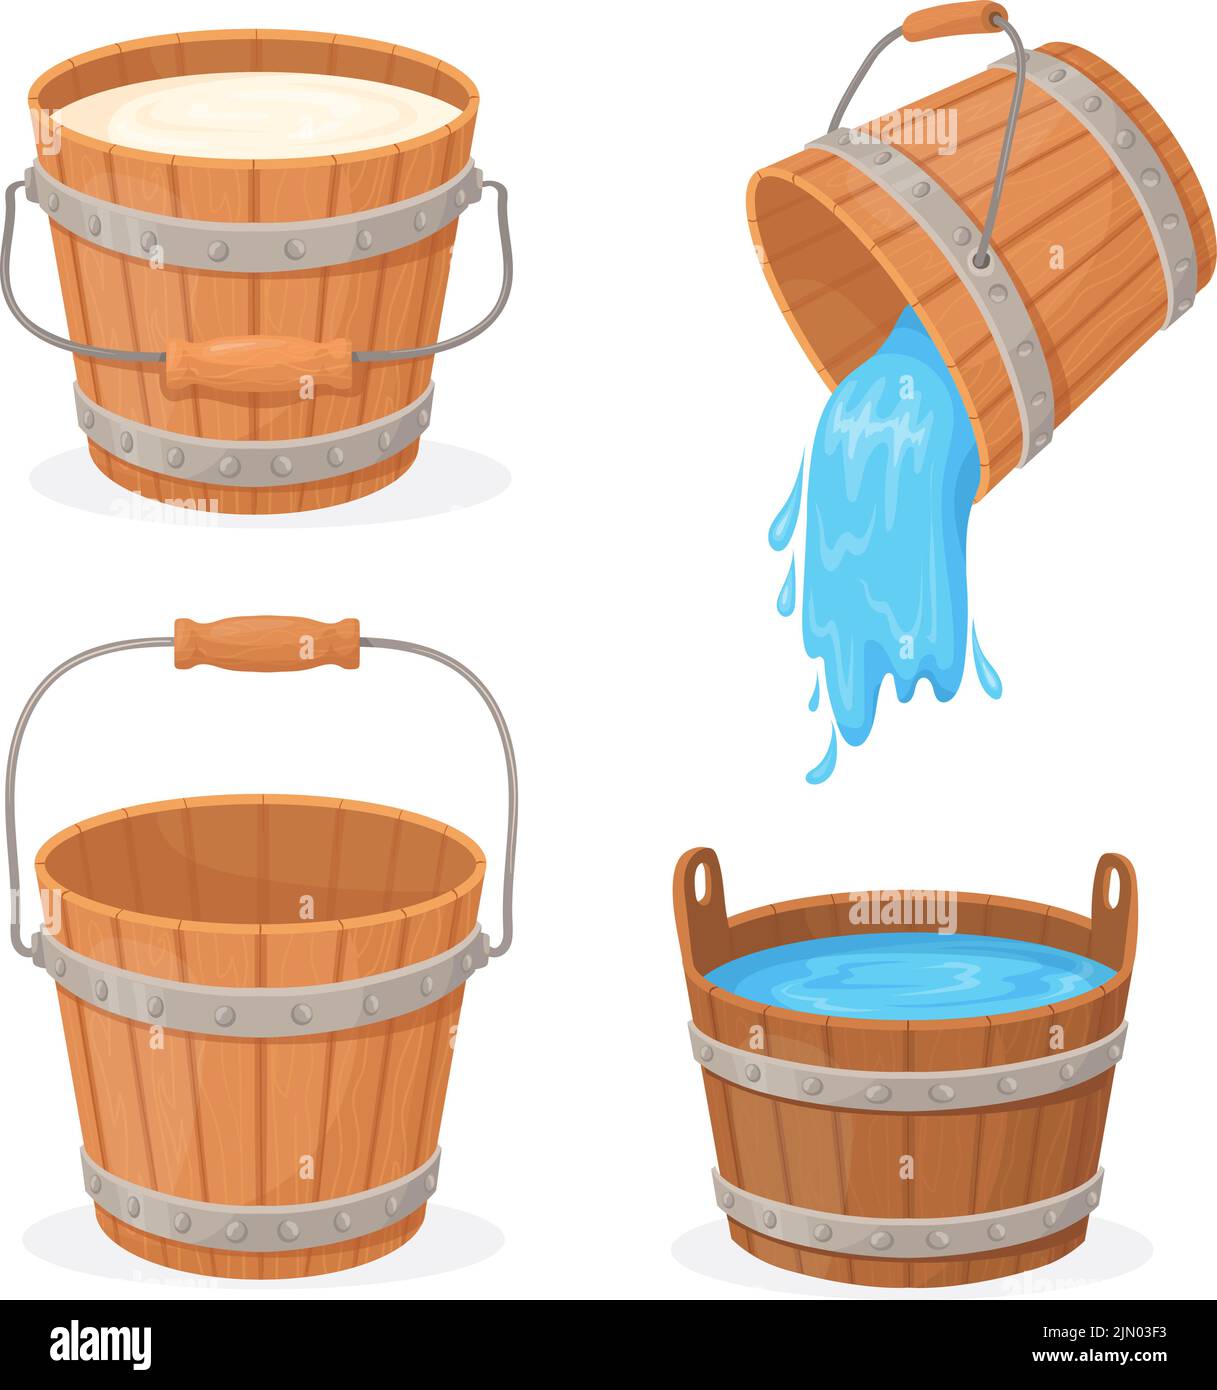 Cartoon wooden buckets. Wood bucket with flowing water or milk, empty pail stream spa sauna bathtub tub barrel jar pot for storage farm honey, isolated neat vector illustration of cartoon bucket Stock Vector